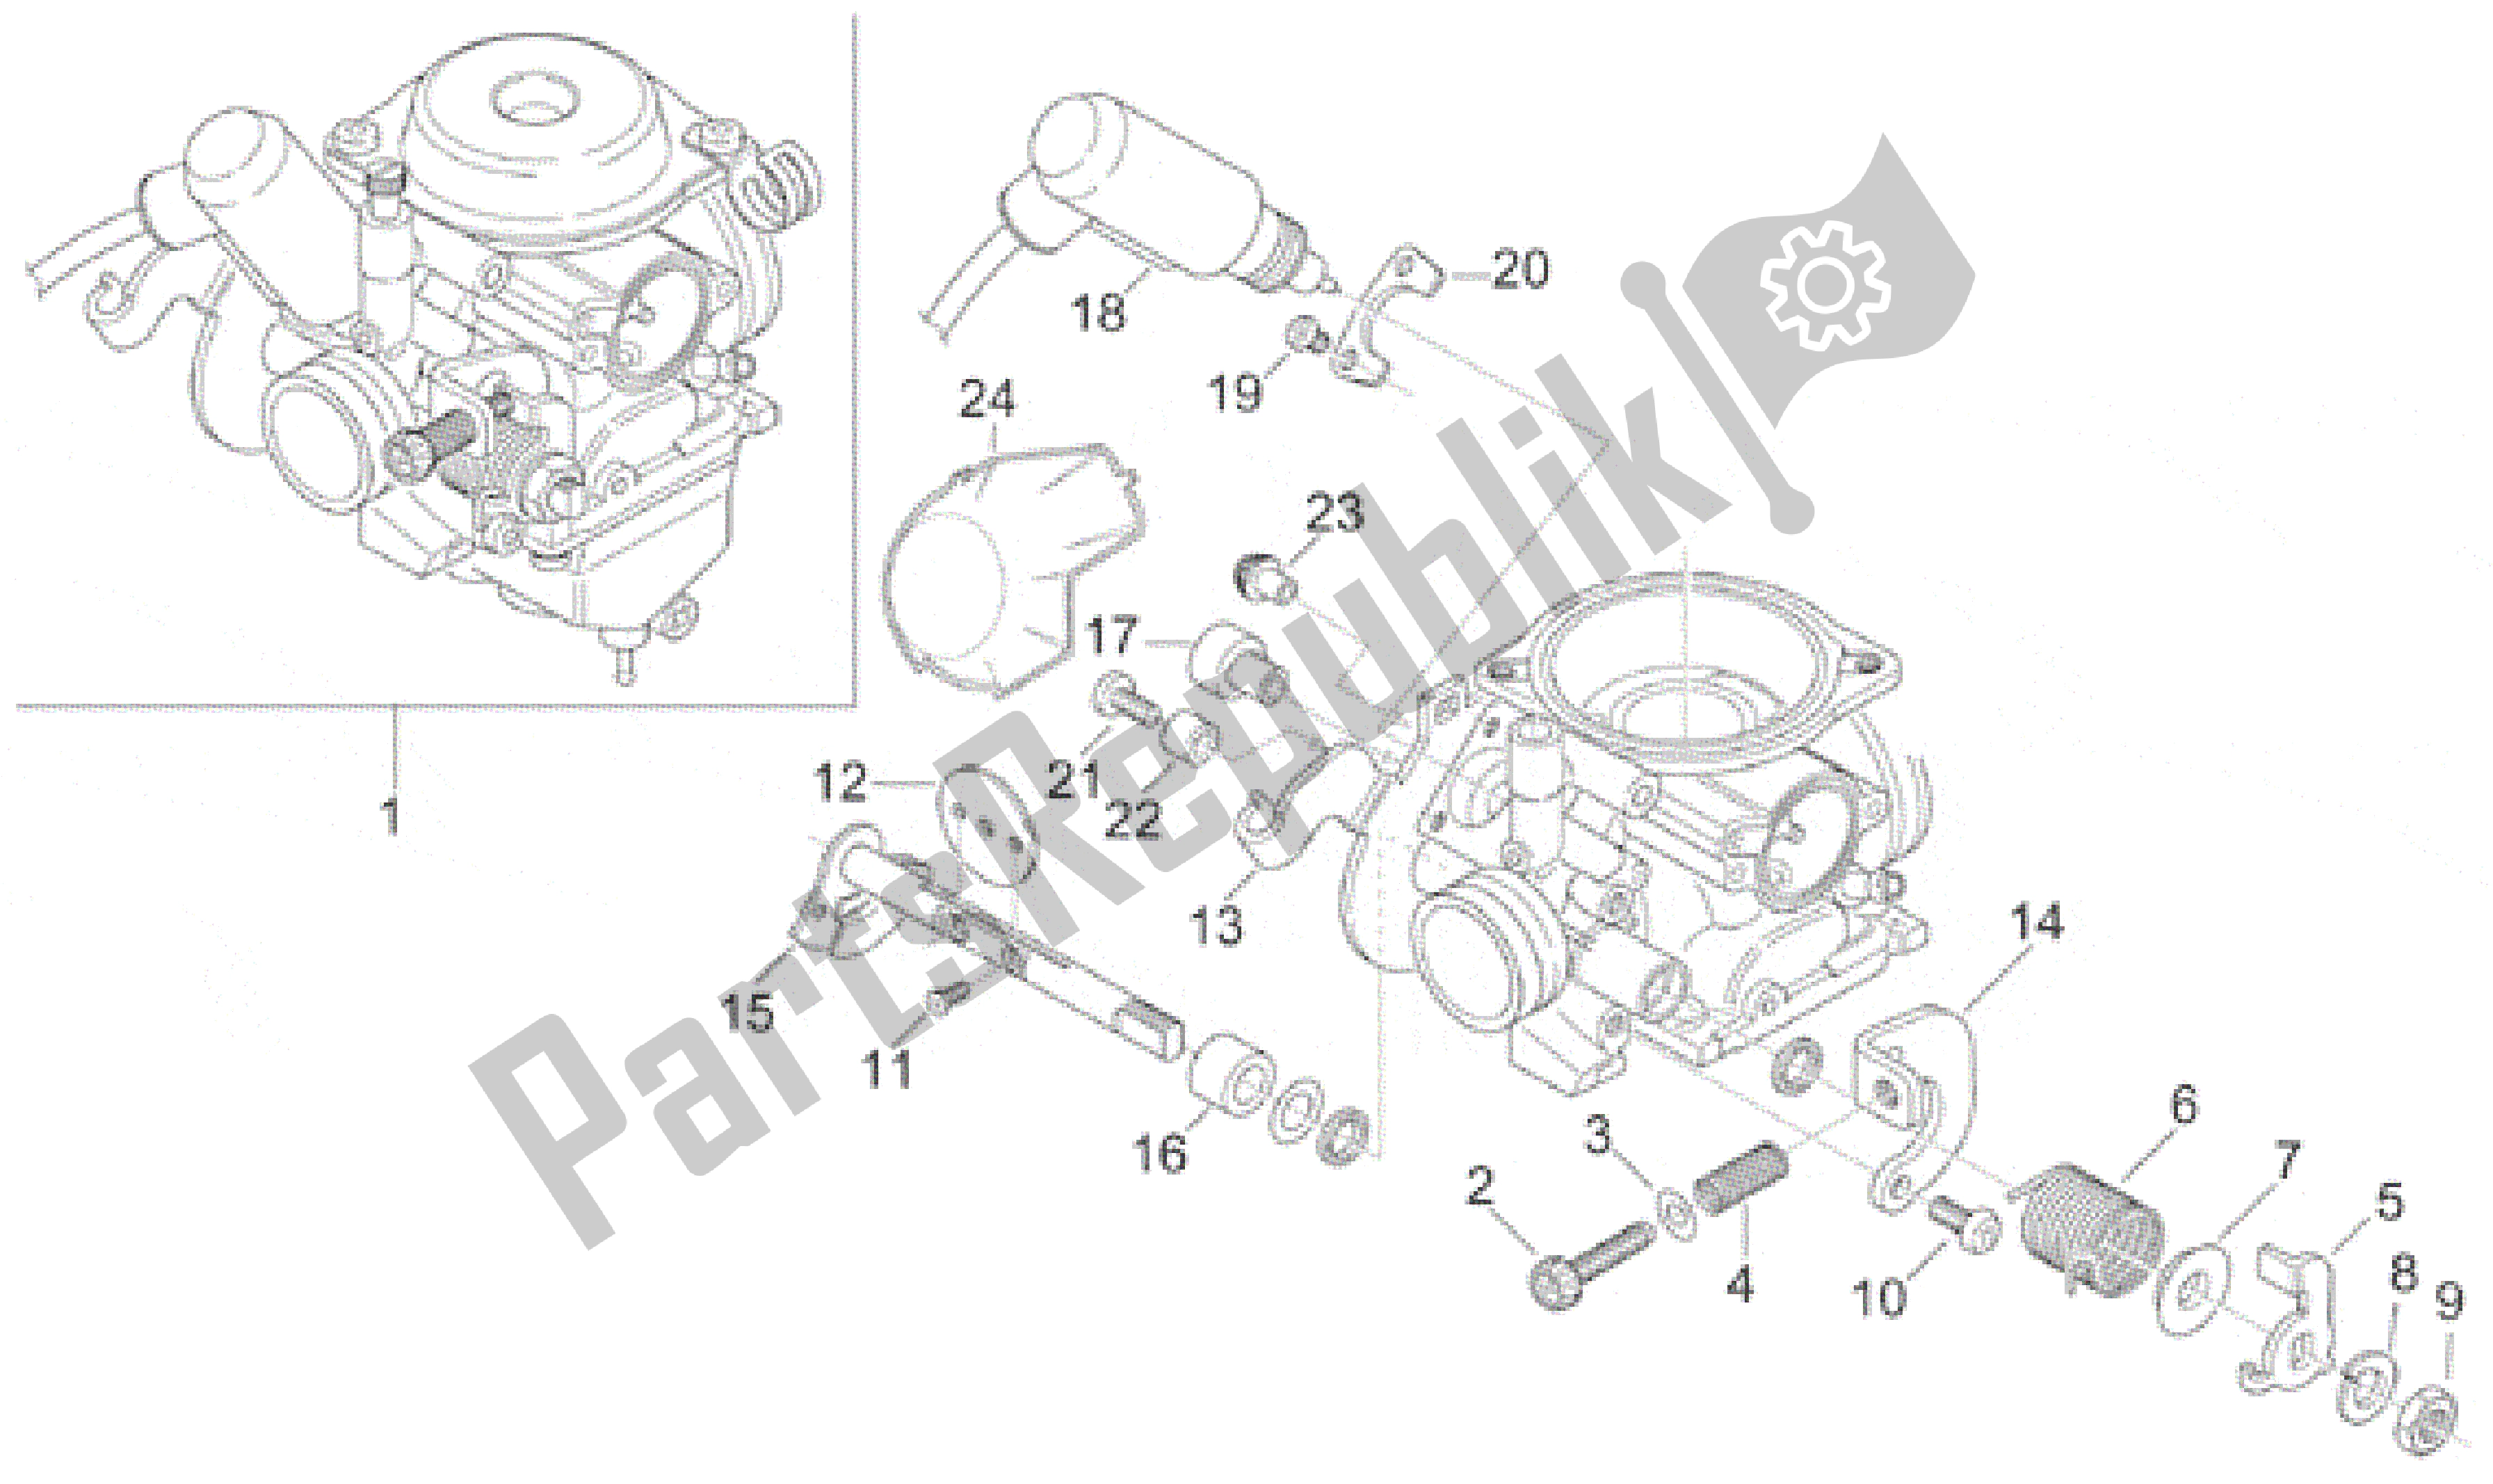 All parts for the Carburettor Ii of the Aprilia Leonardo 150 1999 - 2001